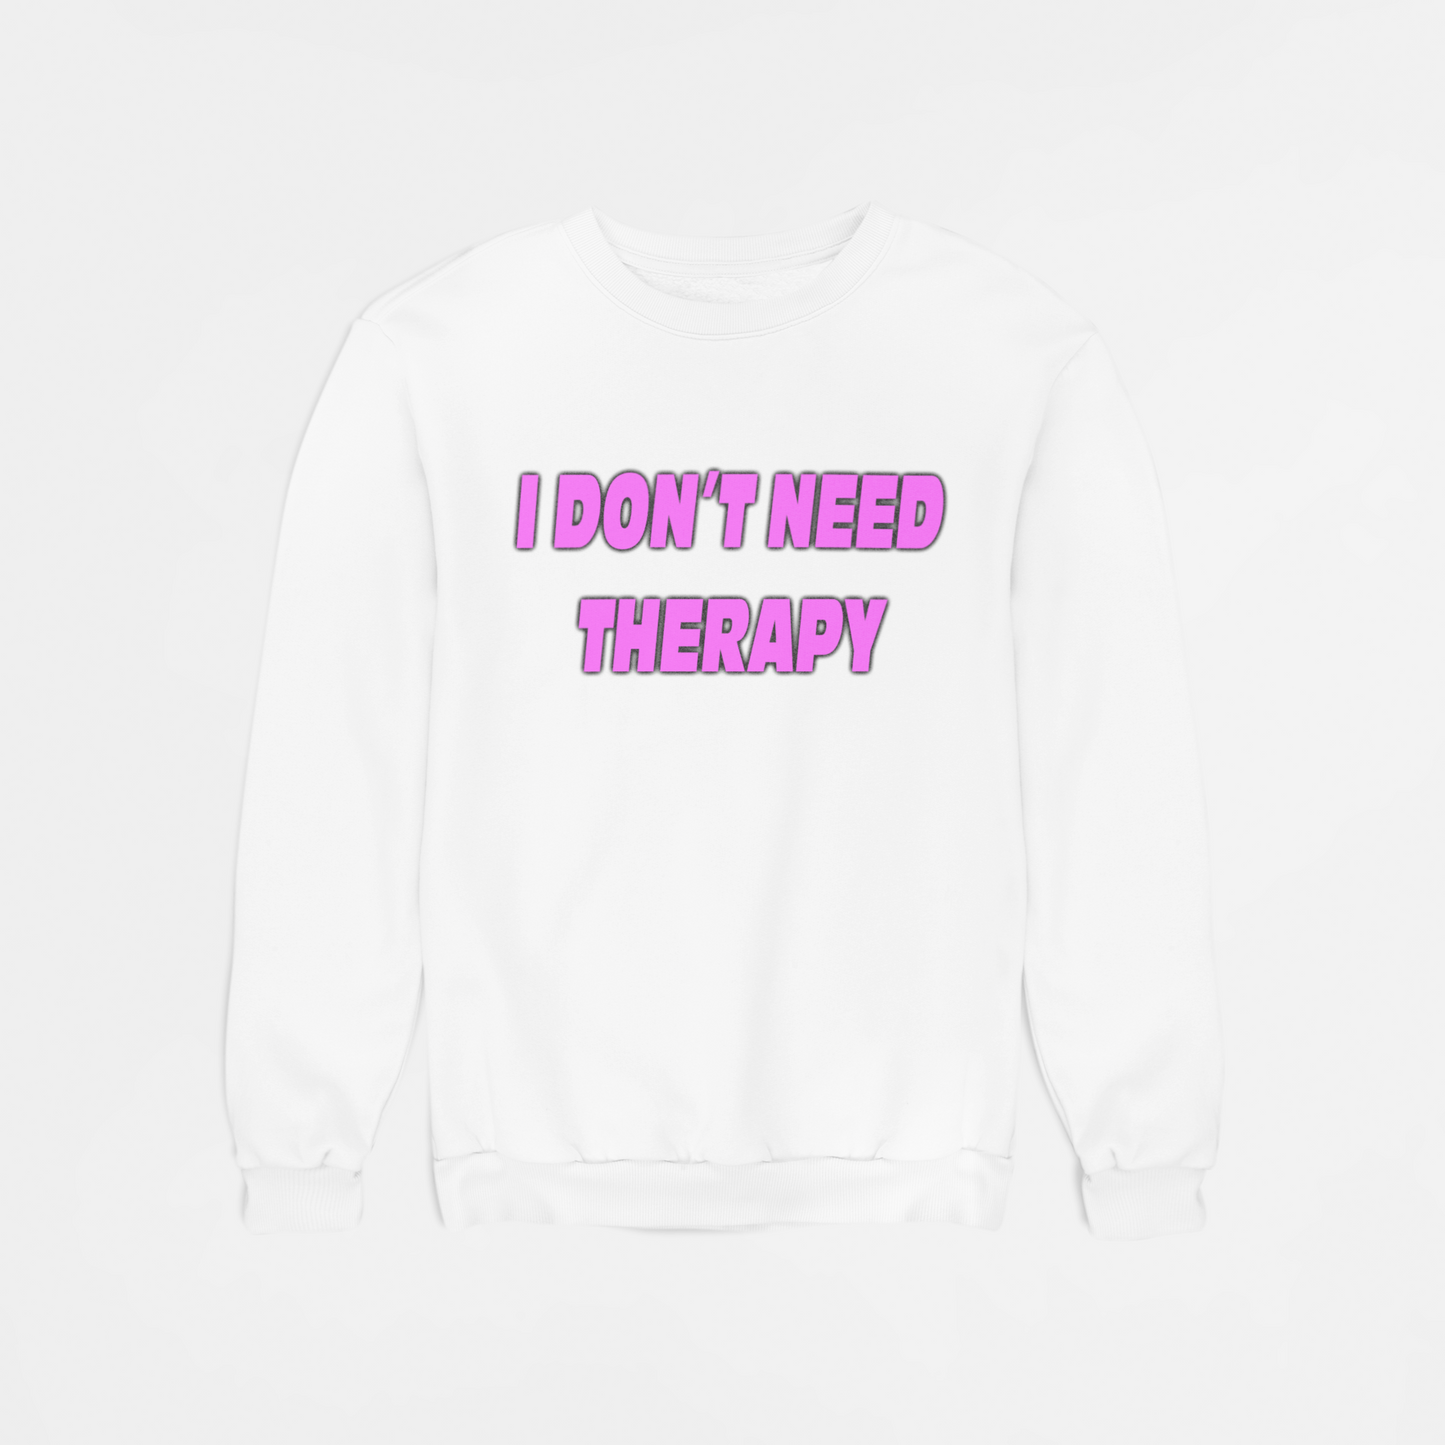 I Don't Need Therapy sweatshirt